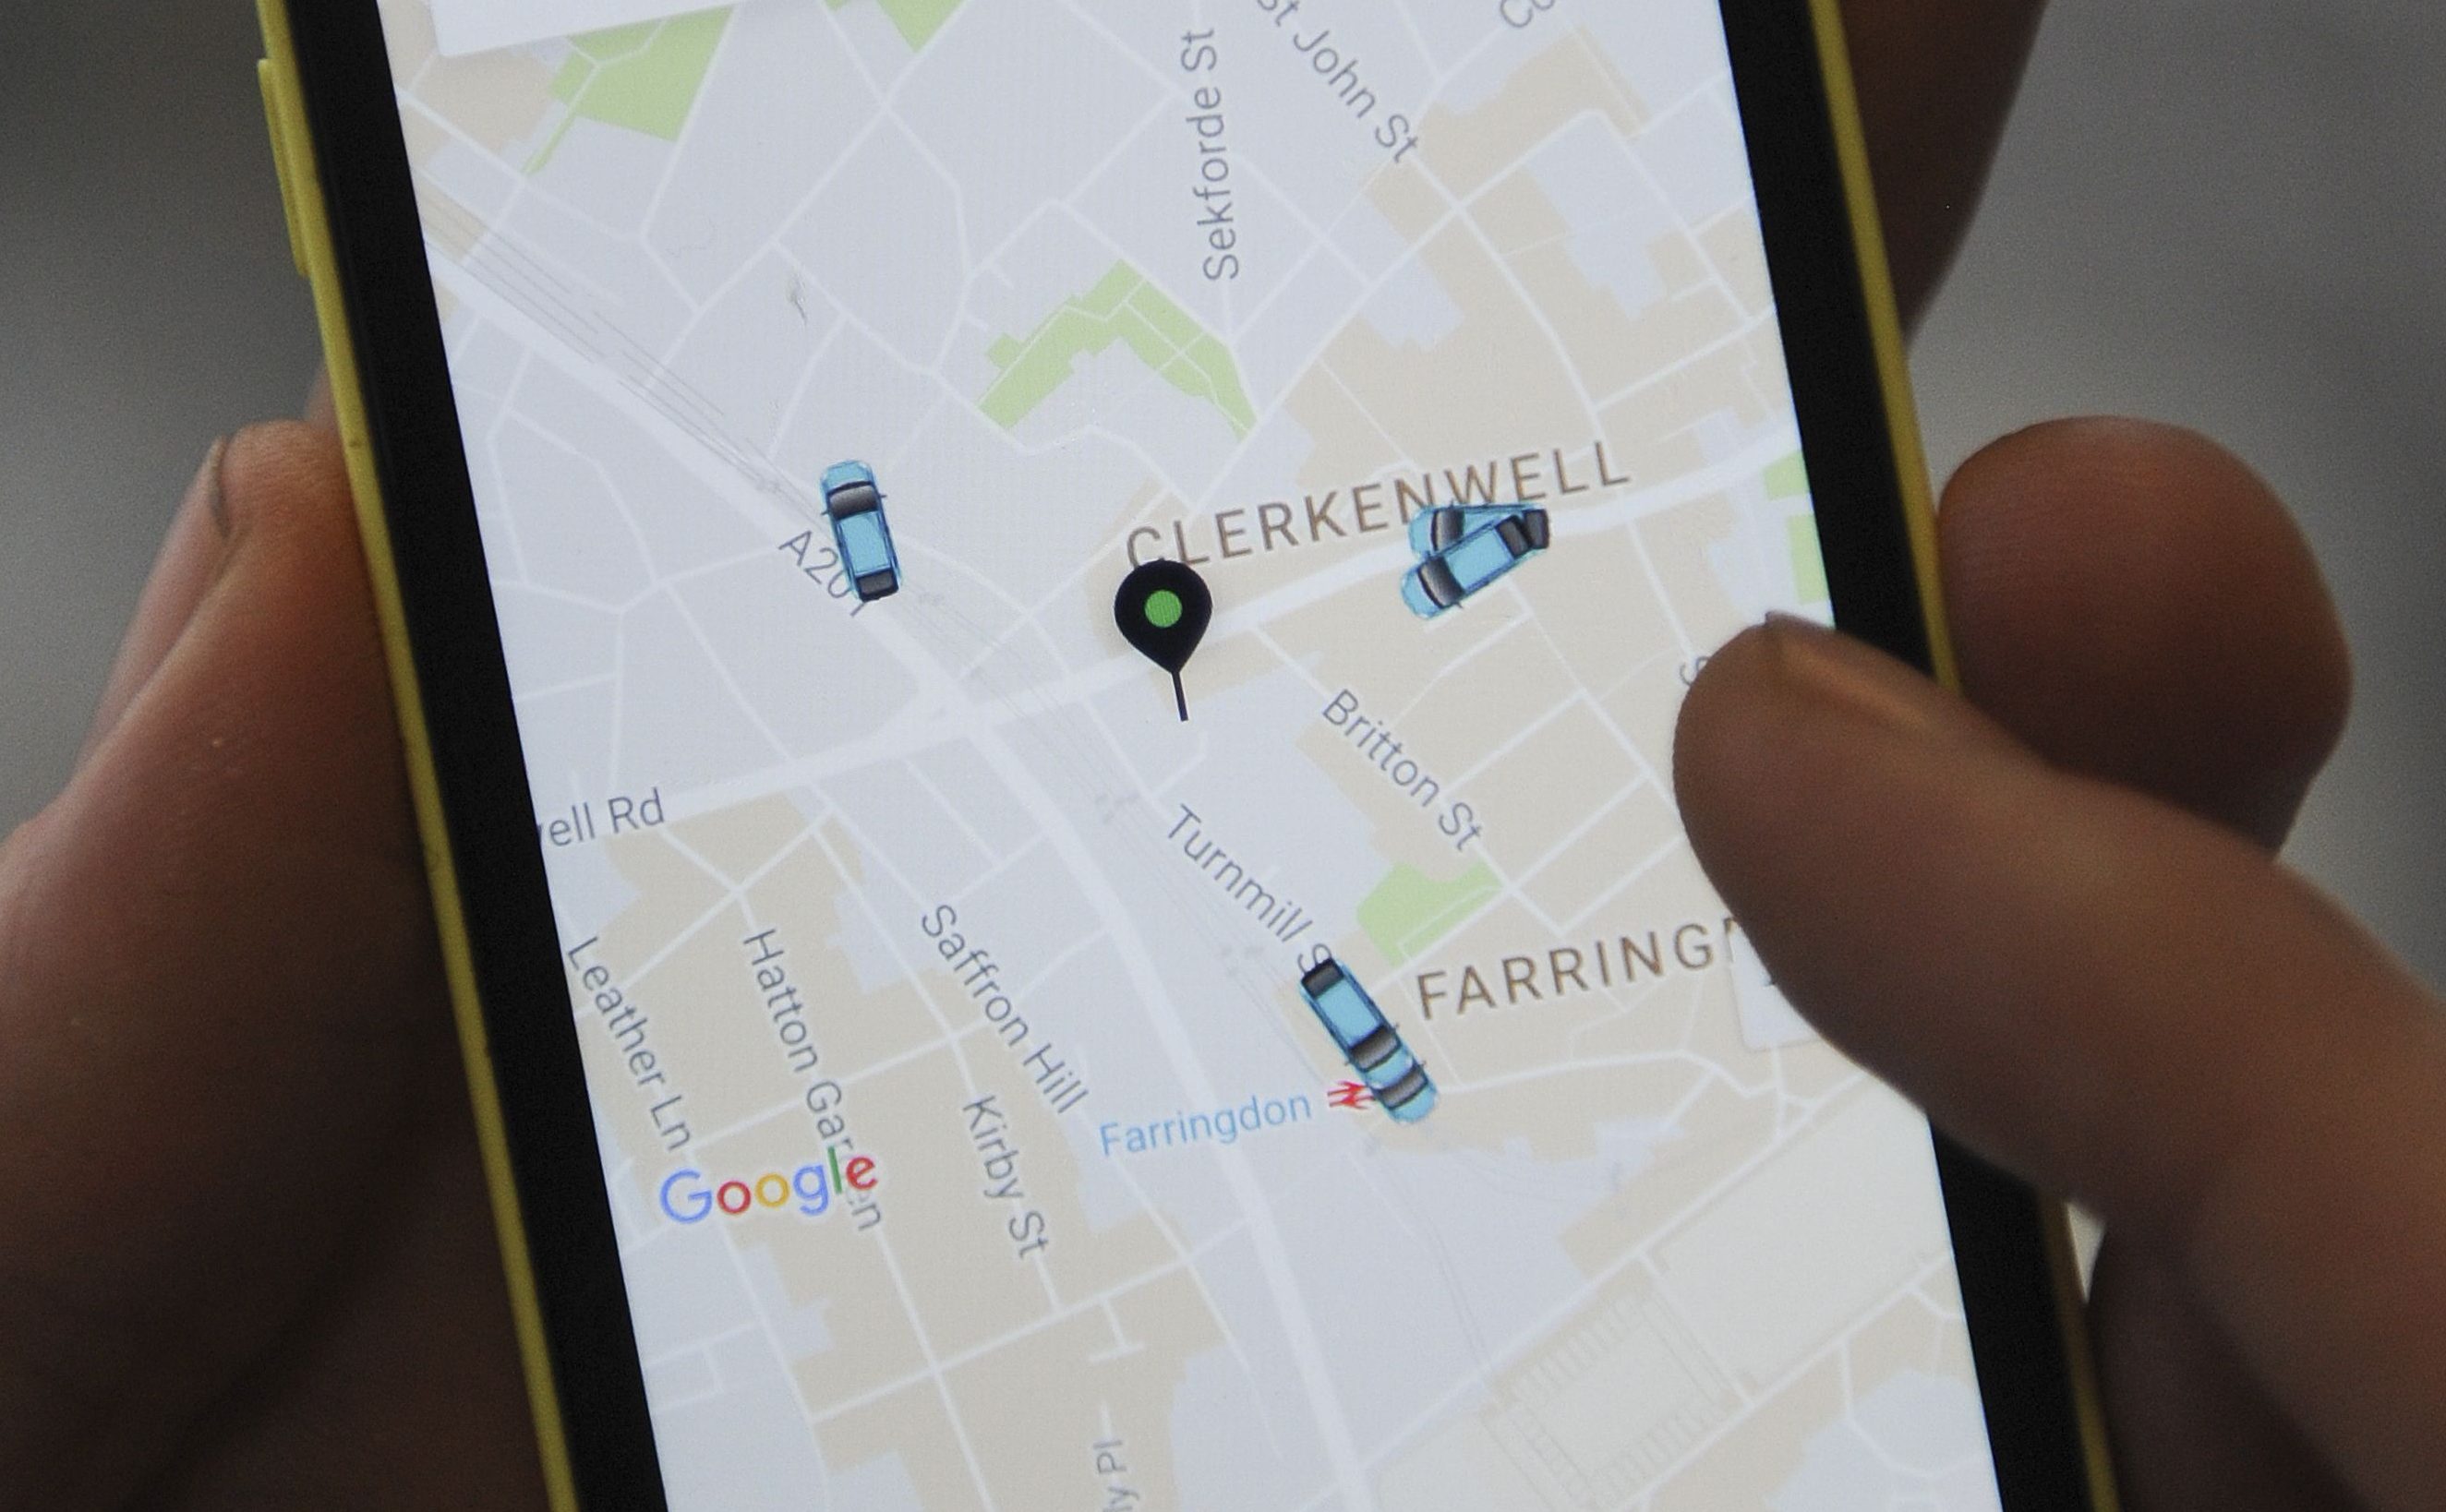 London wirft Uber raus